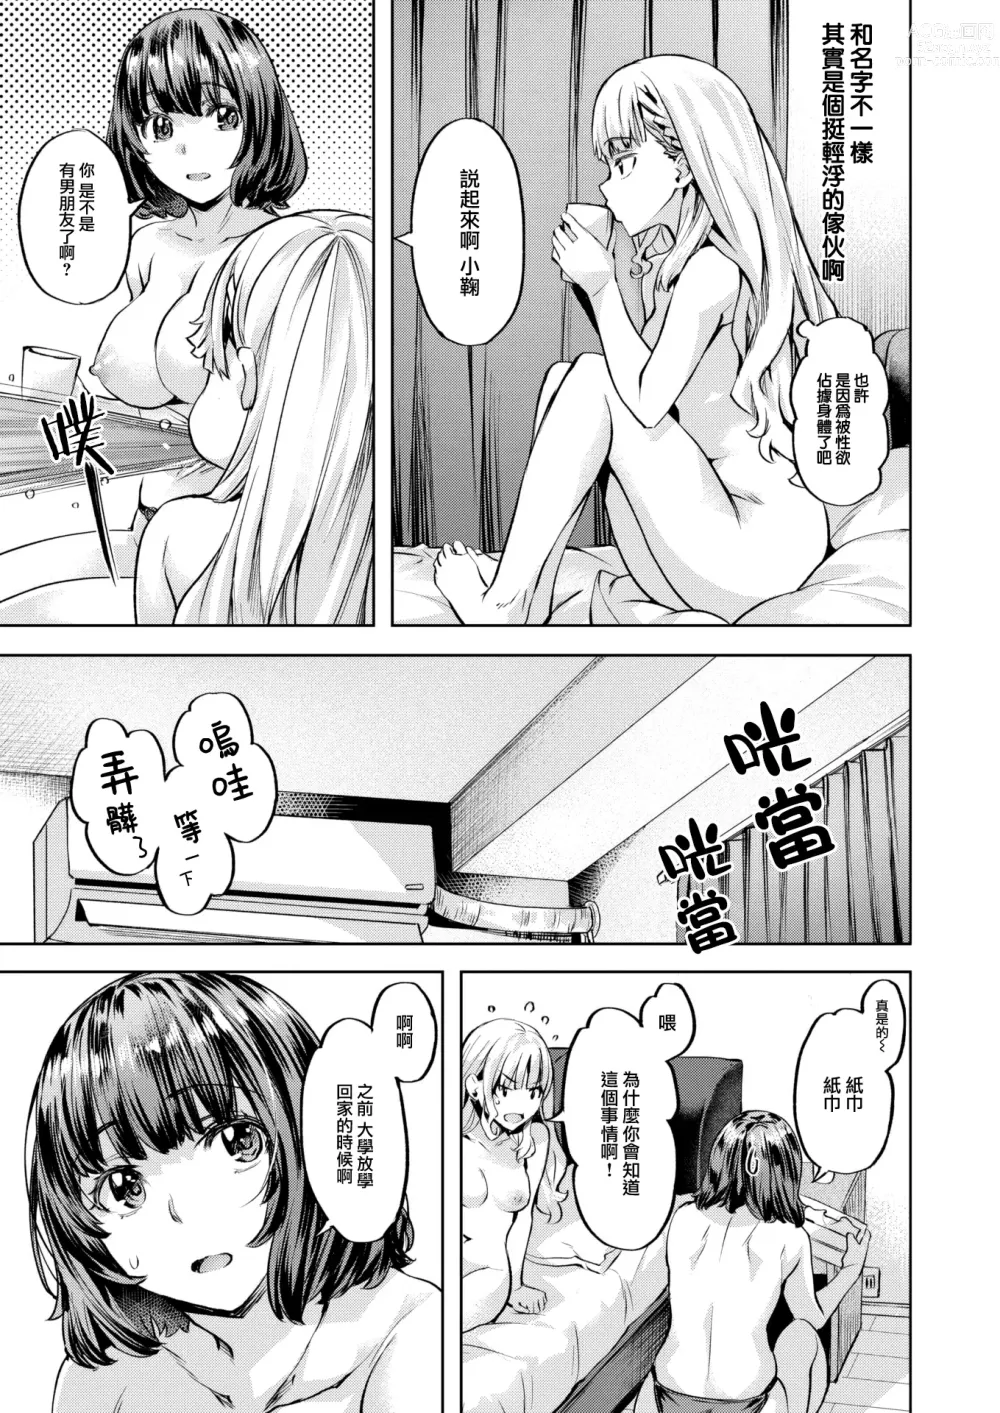 Page 6 of manga Komari Step -step1-